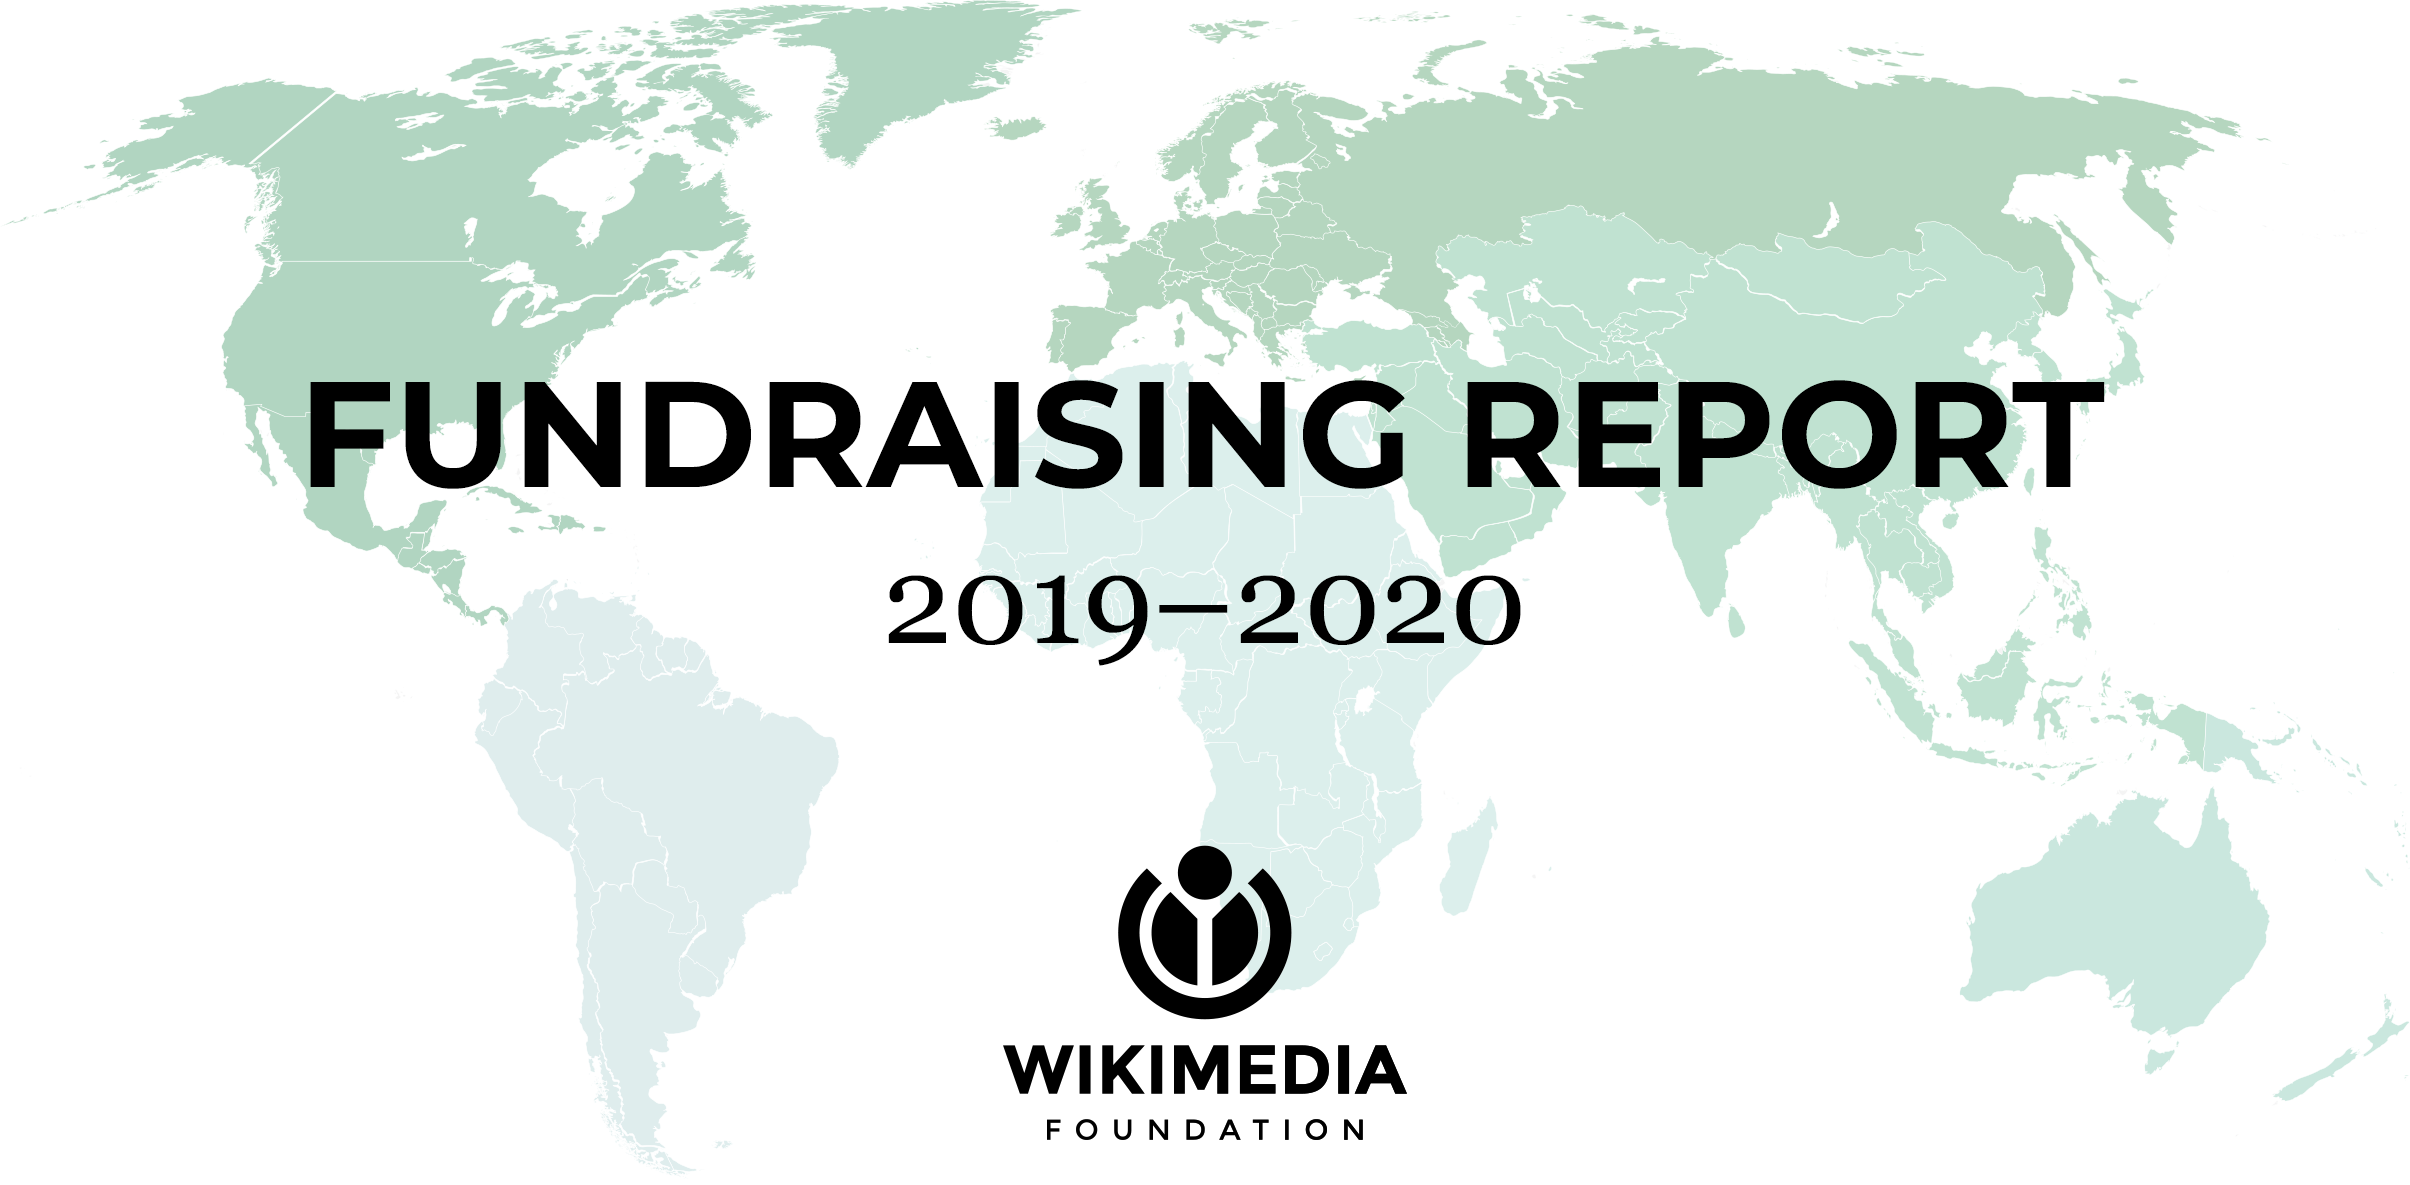 Fundraising Report 2018-2019, Wikimedia Foundation